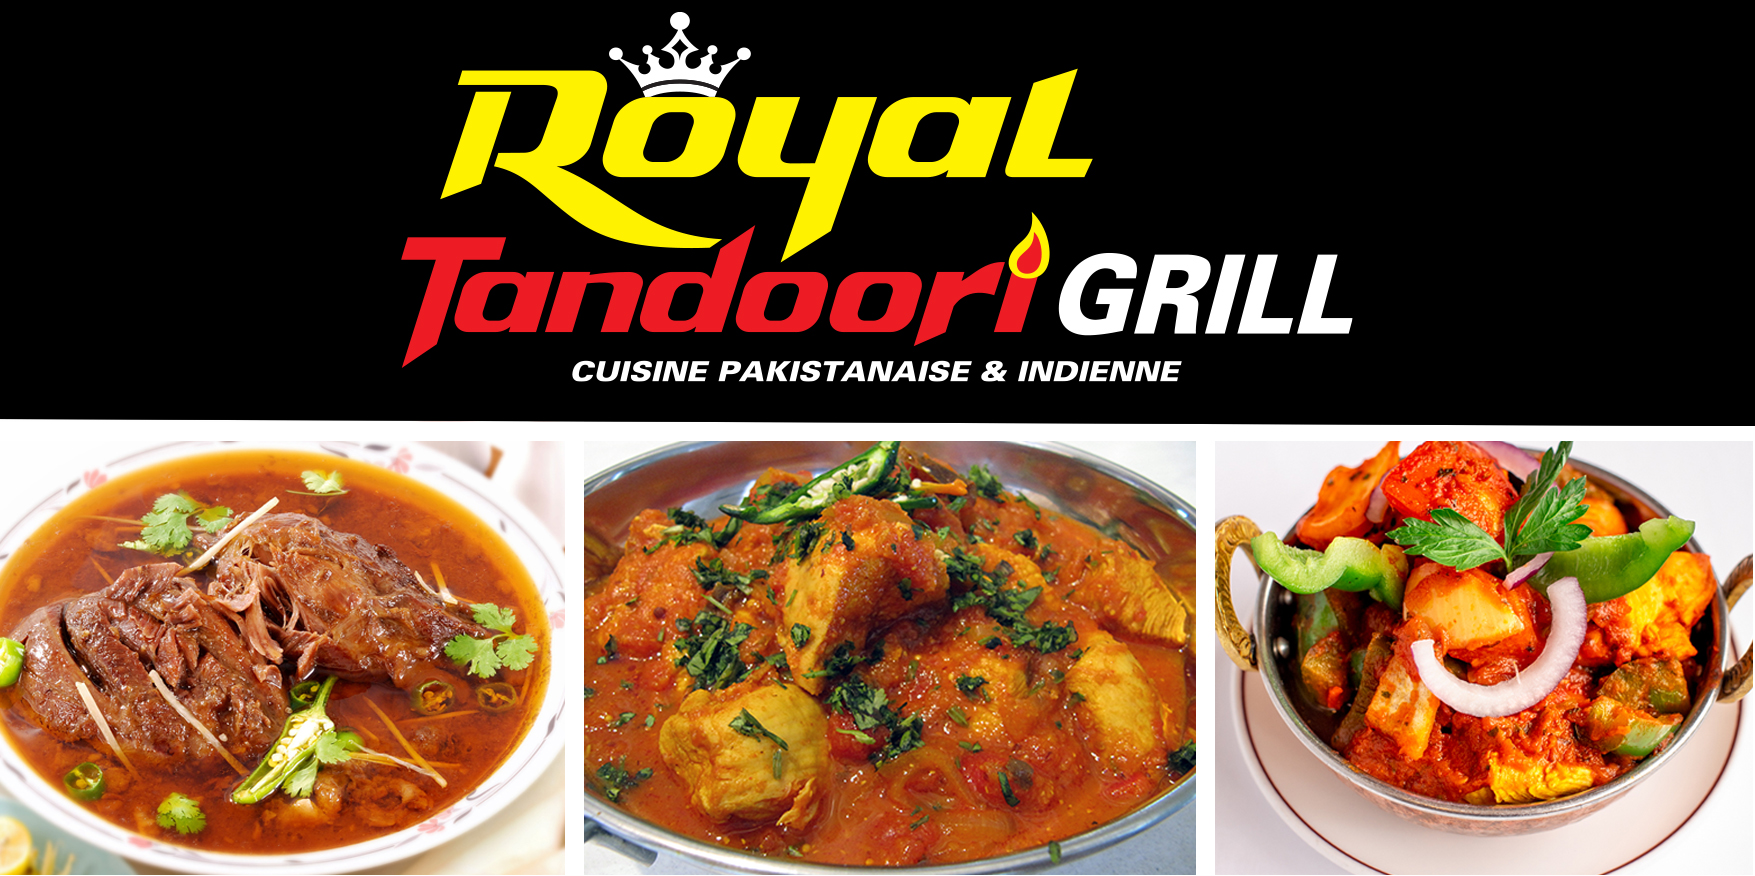 Royal Tandoori Grill restaurant is now open